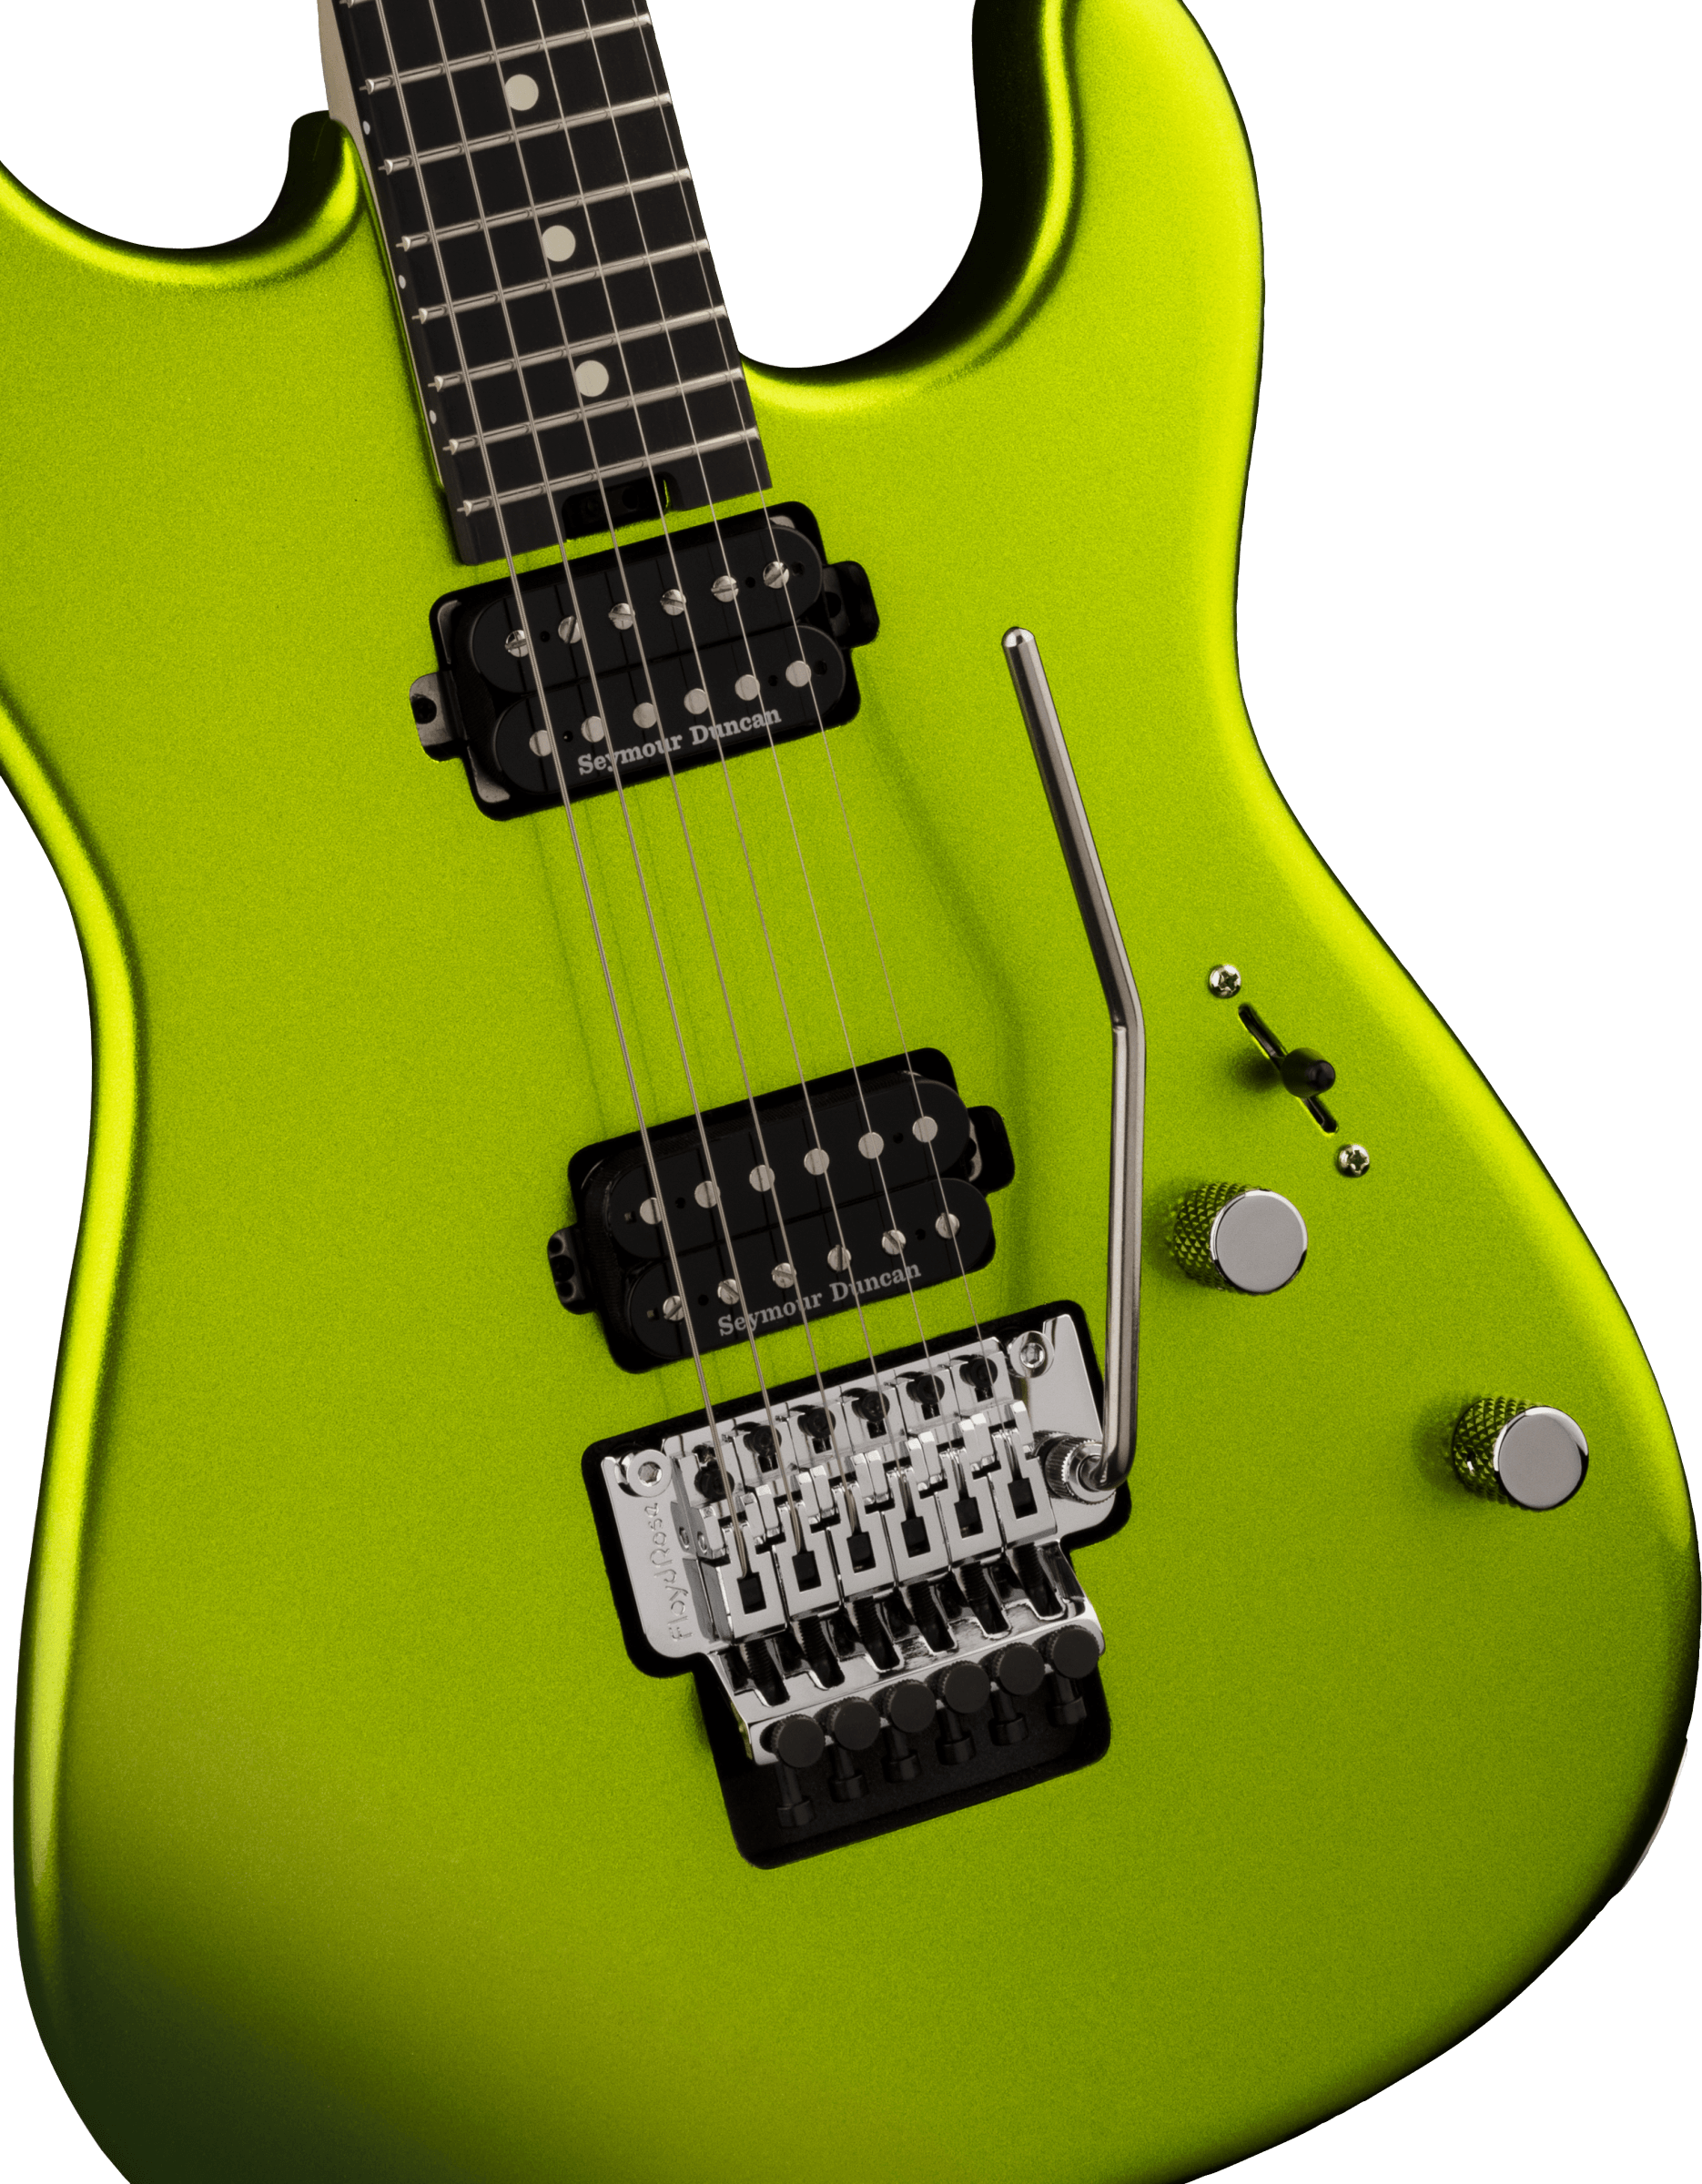 Charvel San Dimas Style 1 Hh Fr E Pro-mod Seymour Duncan Eb - Lime Green Metallic - Str shape electric guitar - Variation 2